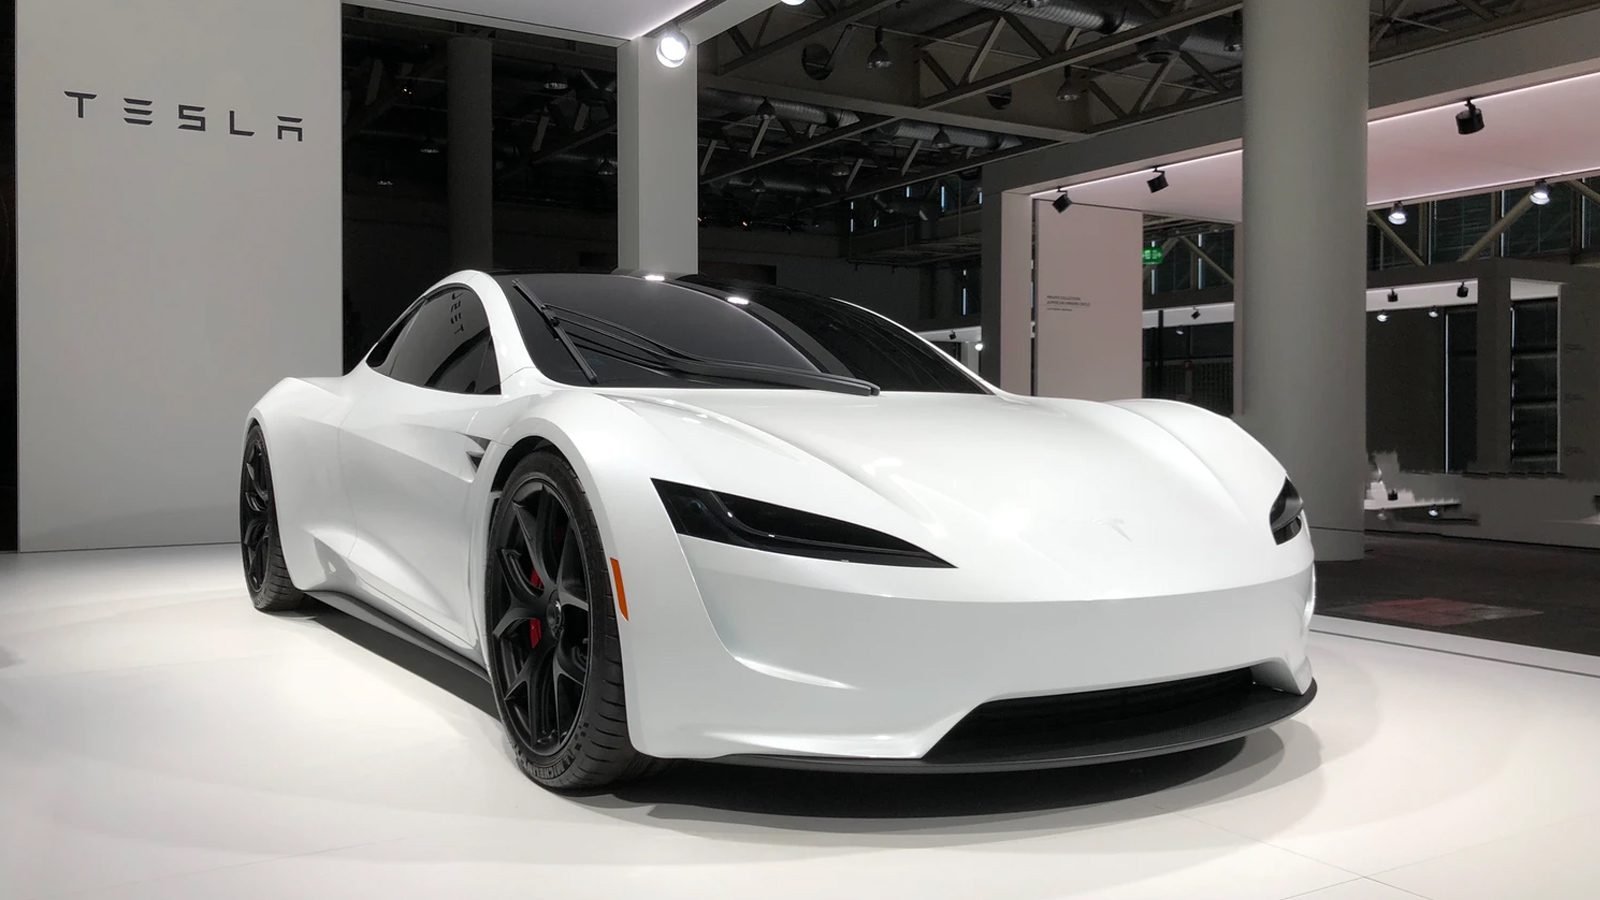 Elon Musk Elaborates on Tesla's New Electric Motor